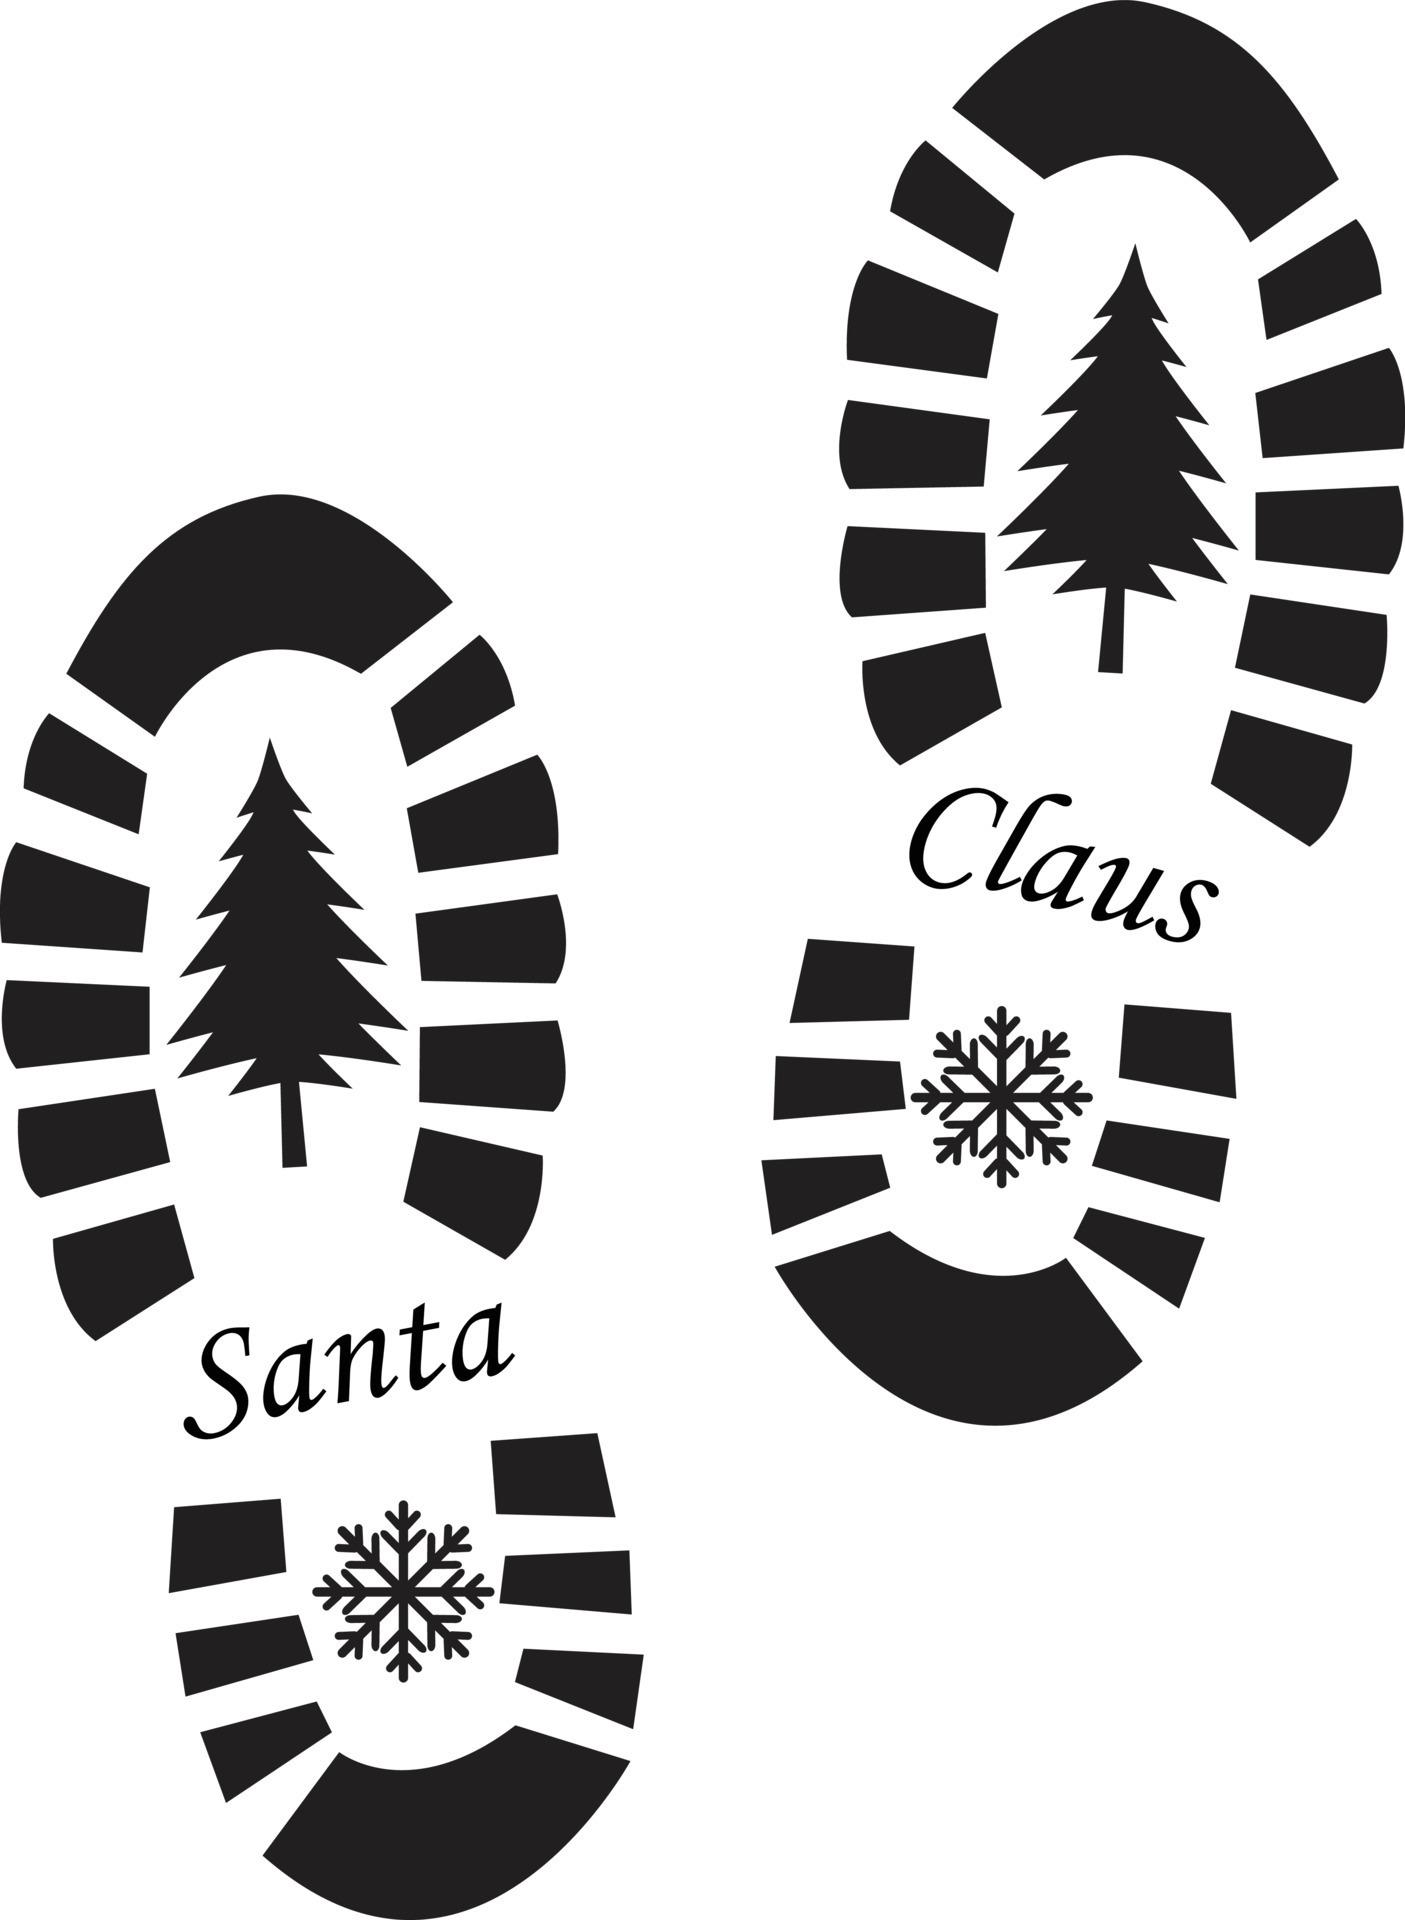 https://static.vecteezy.com/system/resources/previews/015/359/923/original/santa-footprint-on-white-background-claus-cut-foot-template-santa-claus-footprint-stencil-designs-flat-style-vector.jpg